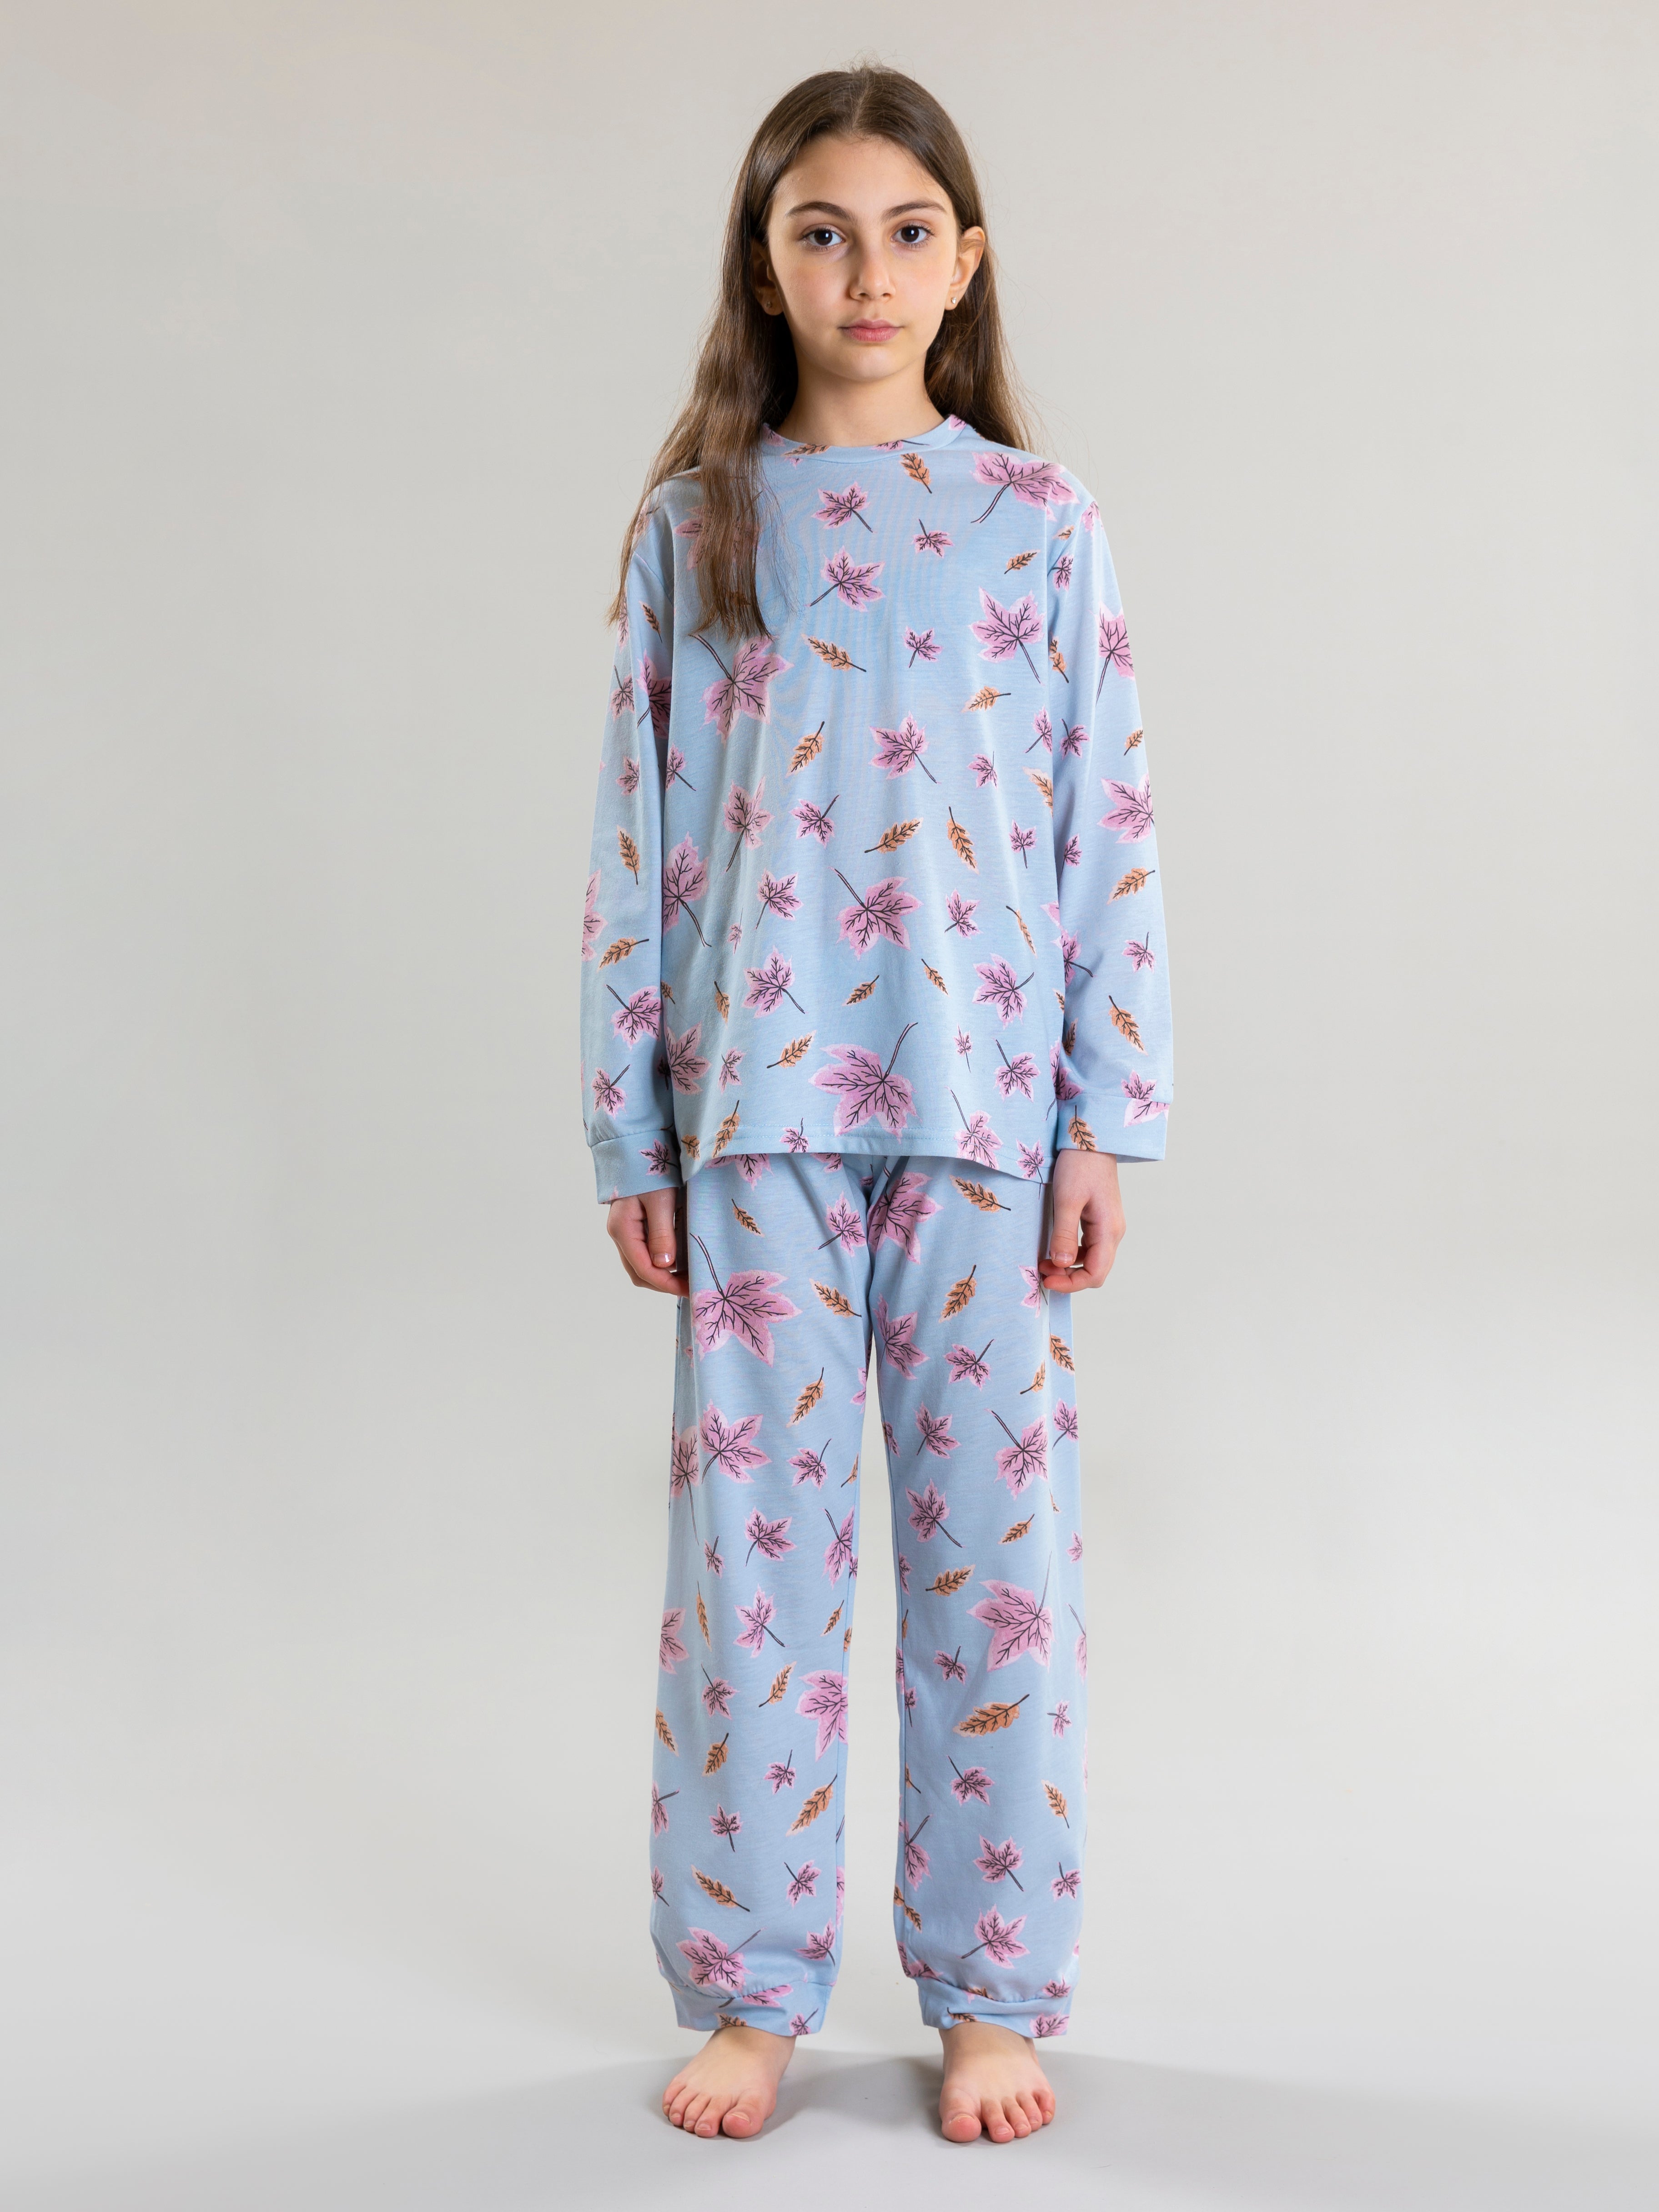 Autumn Leaves Pyjama Set For Girls - Blue - Pear